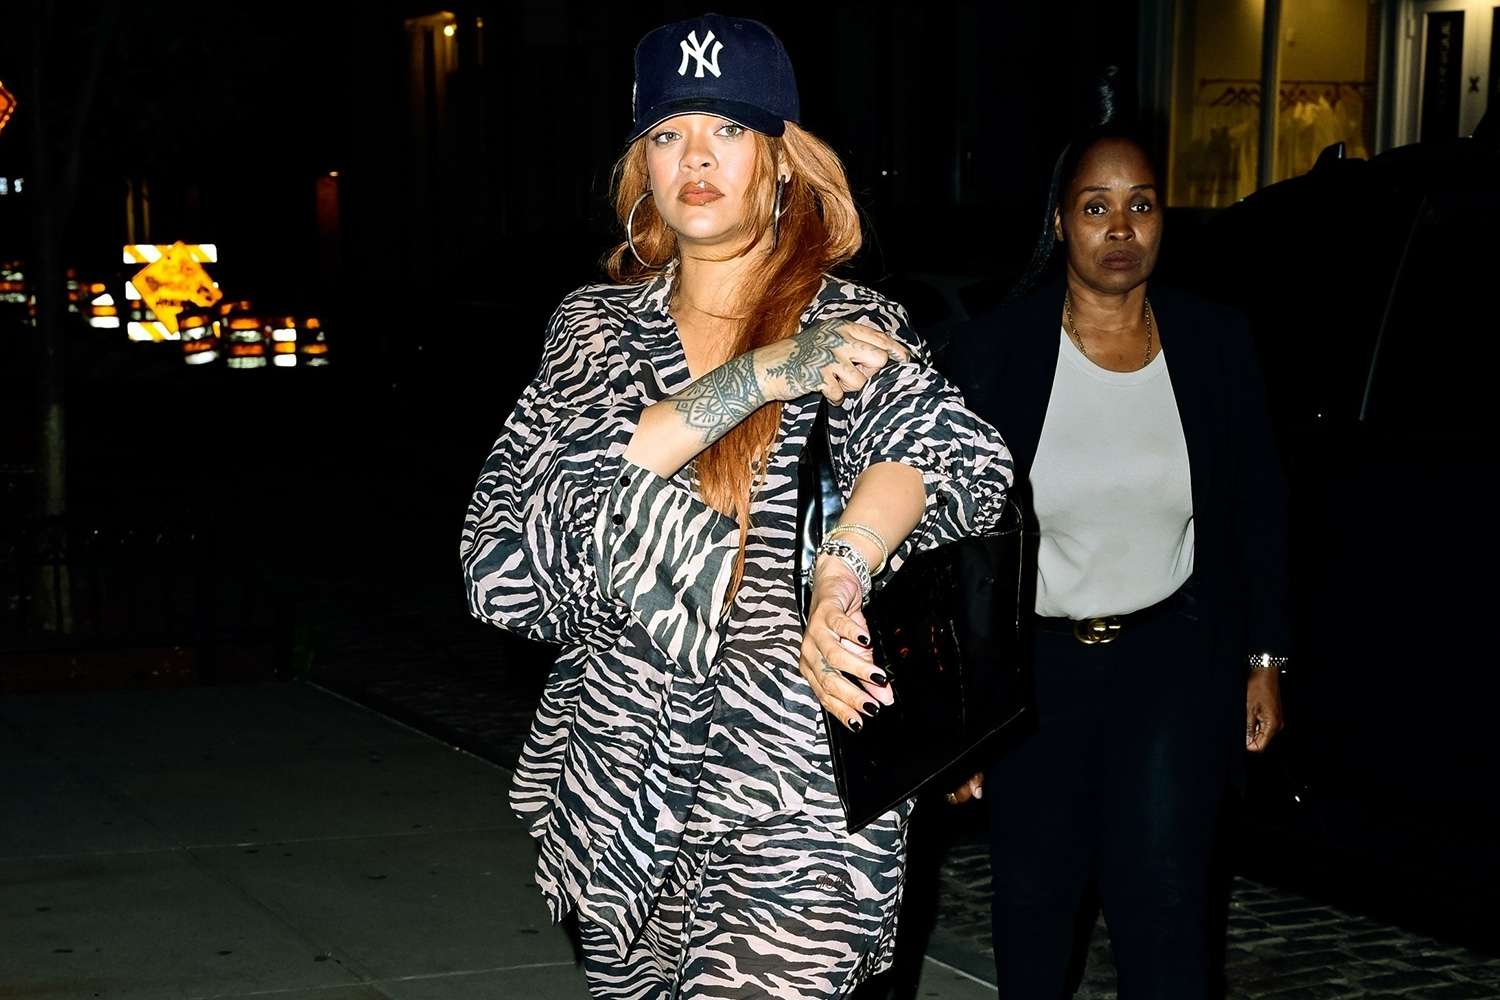 Rihanna Rocks Zebra Print for Date Night with A$AP Rocky in N.Y.C.